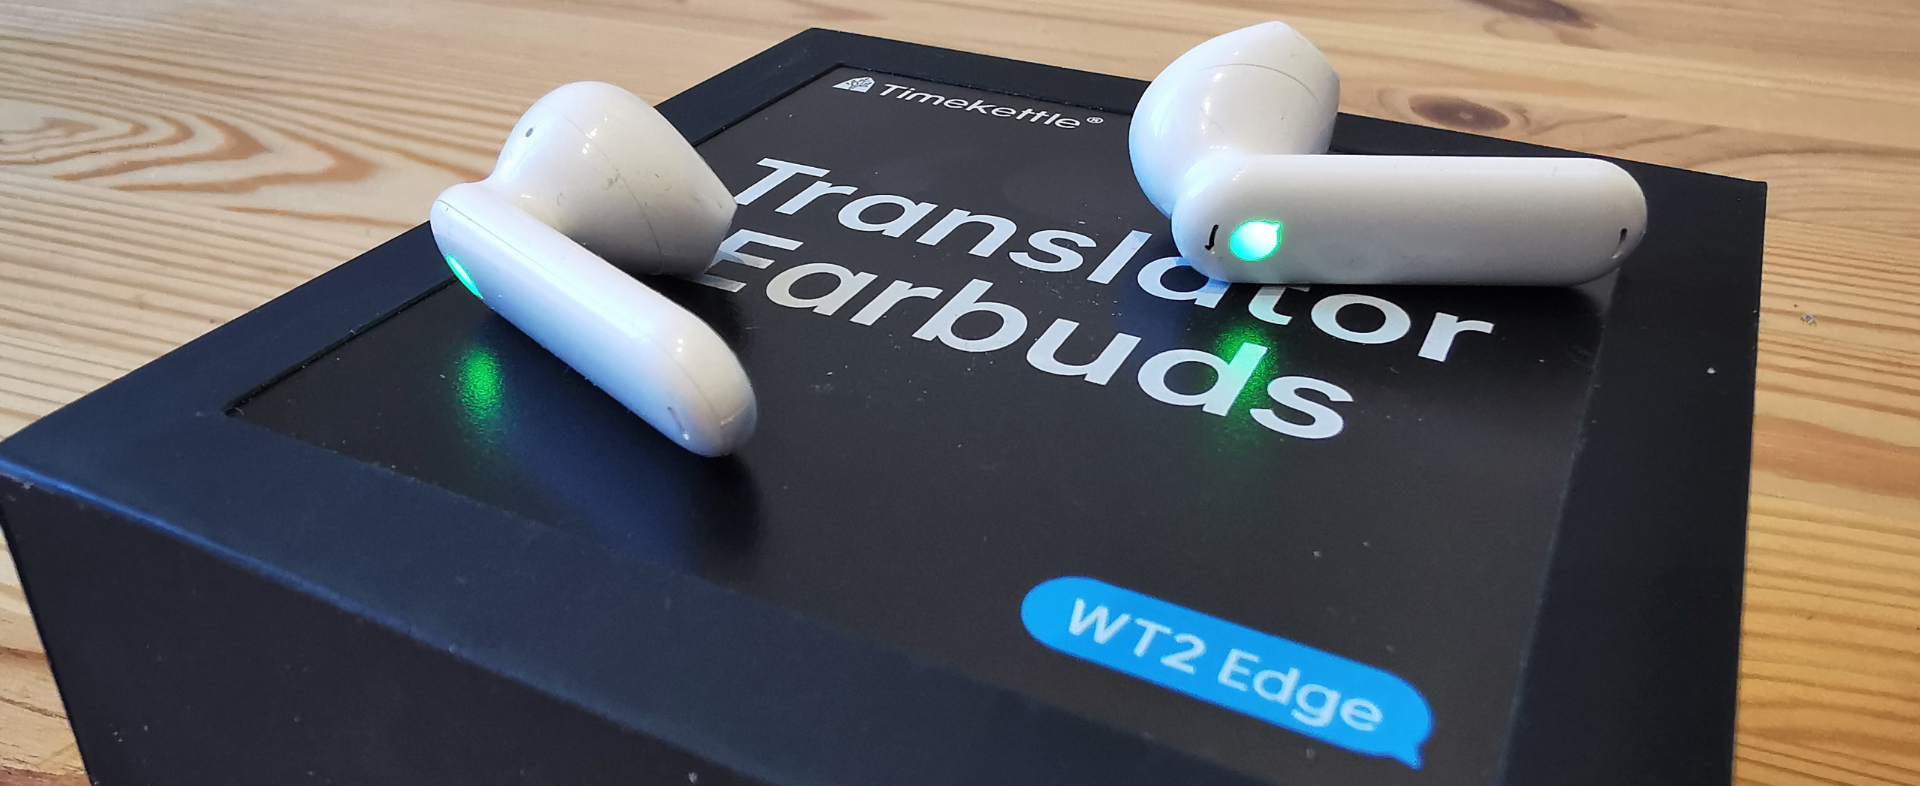 TimeKettle WT2 Edge AI Translator Earbuds review TechRadar